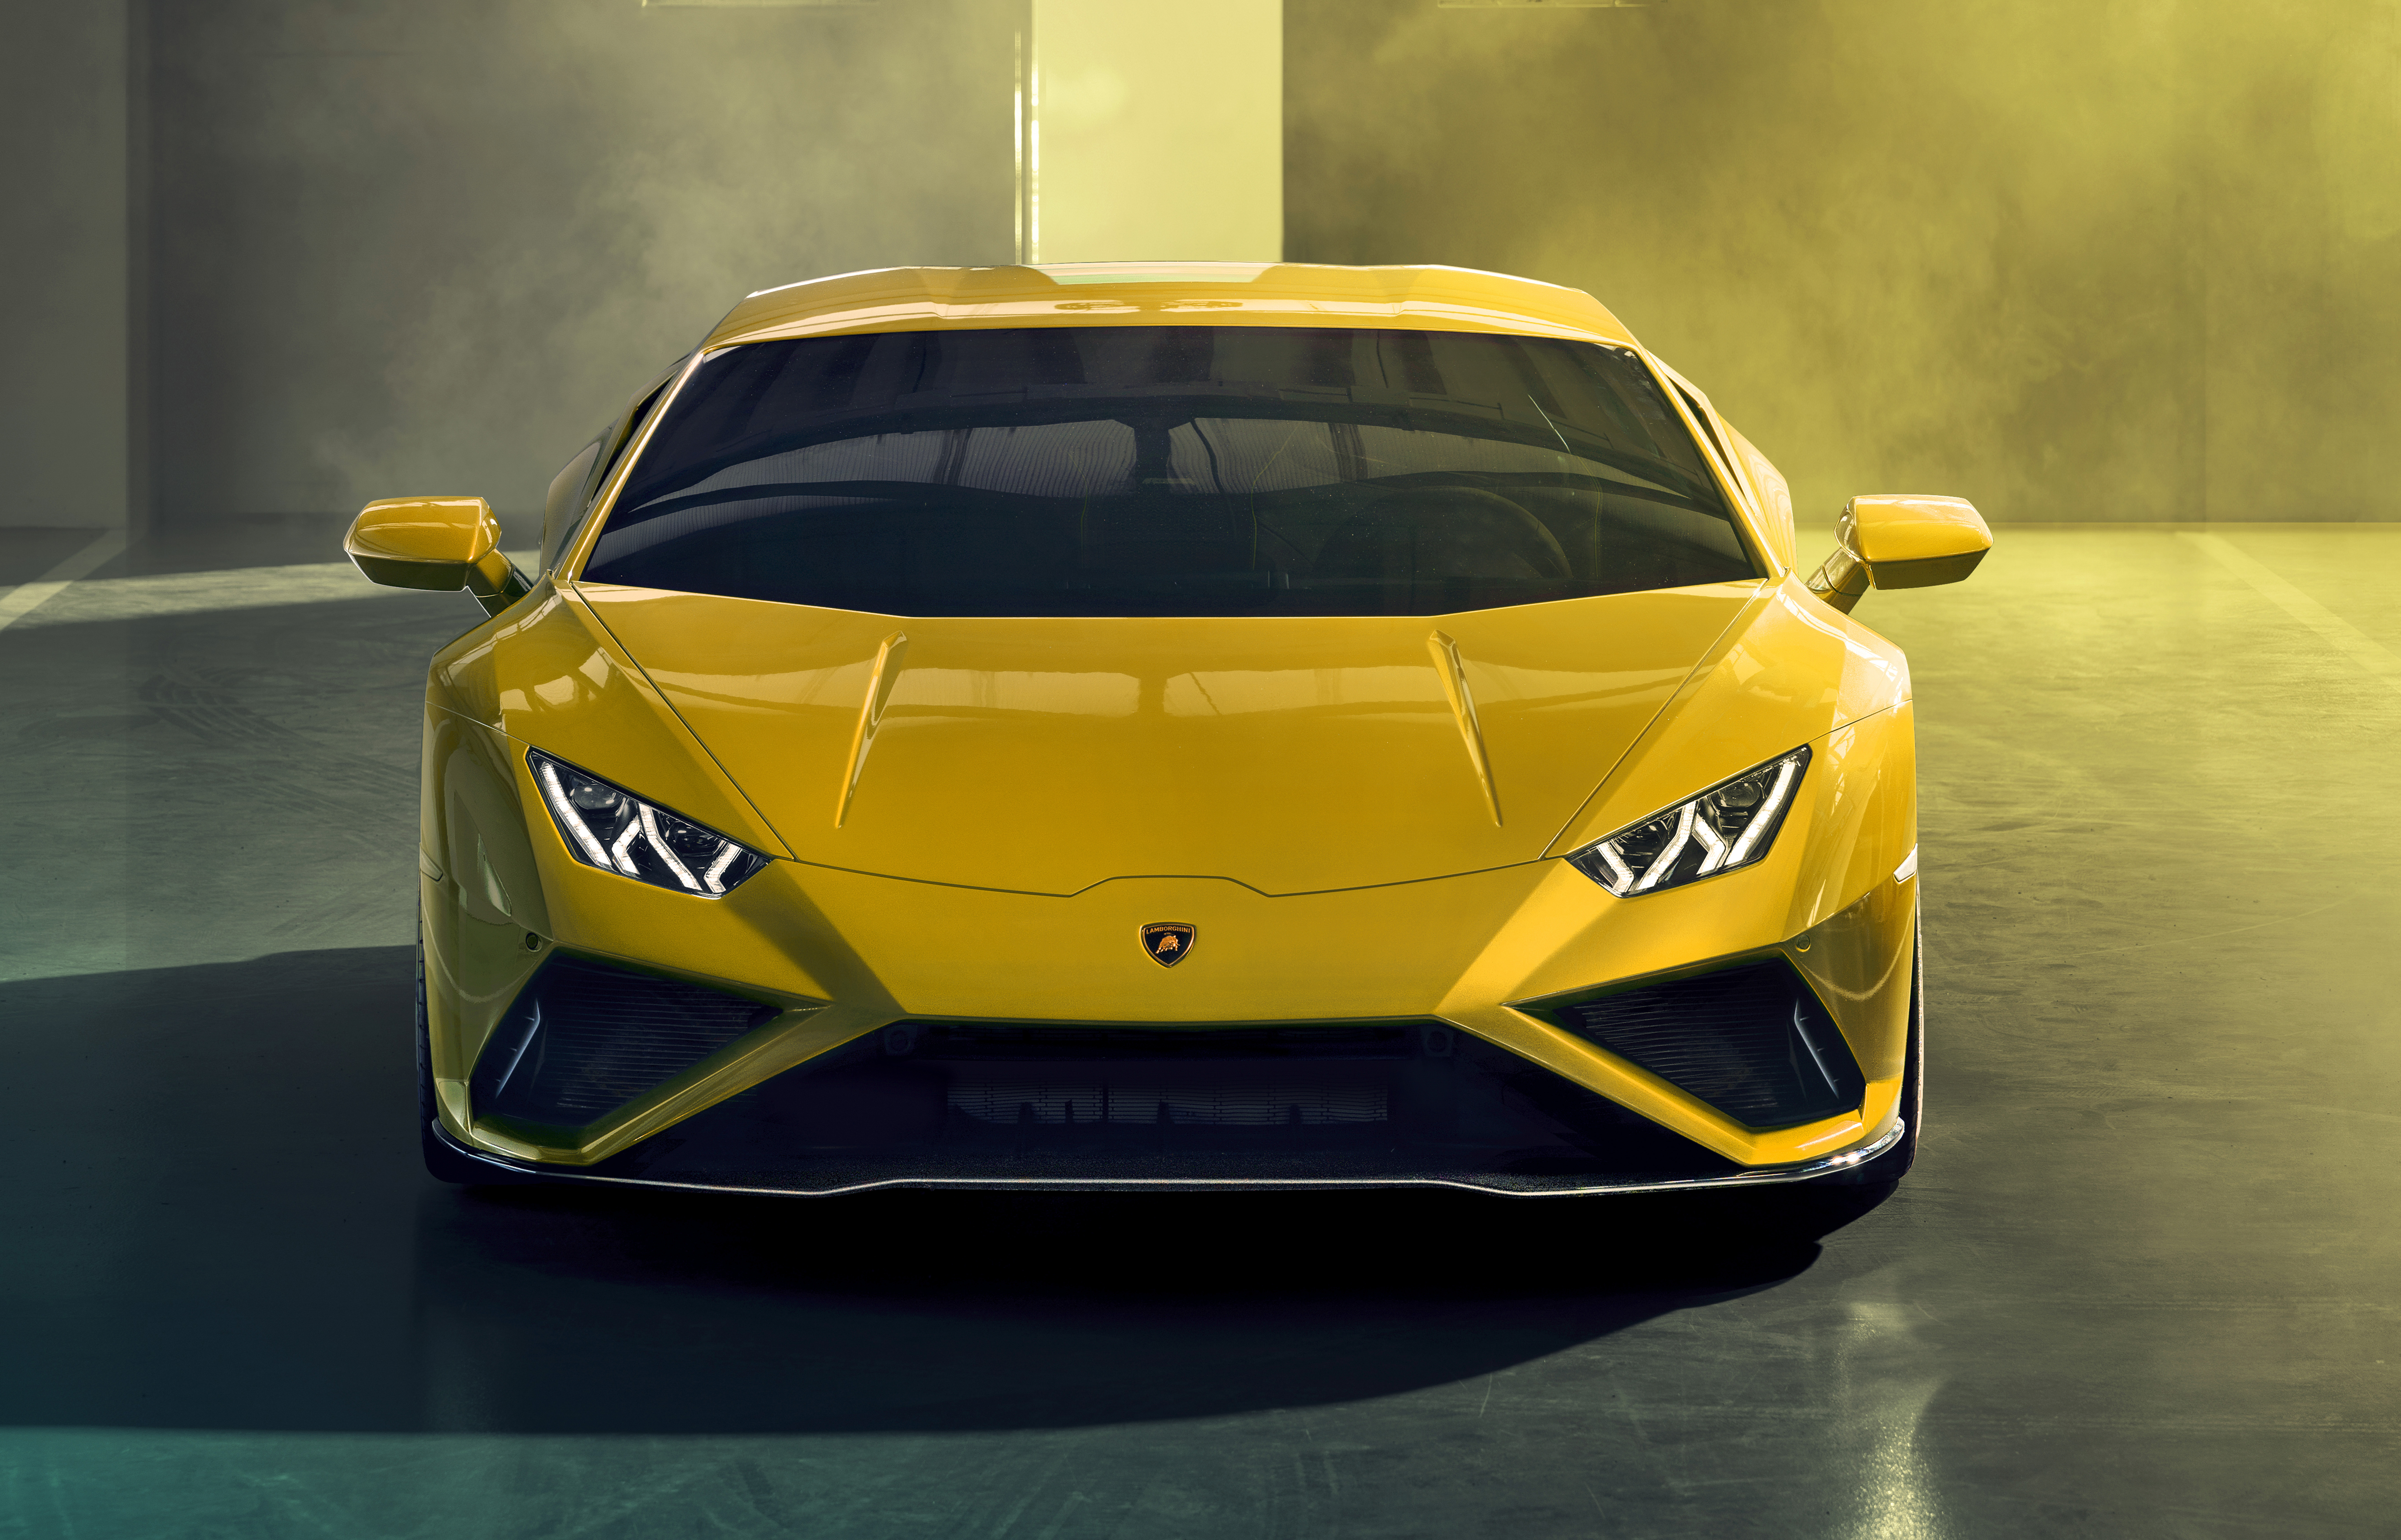 Baixe gratuitamente a imagem Lamborghini, Carro, Super Carro, Lamborghini Huracan, Veículos, Carro Amarelo, Lamborghini Huracán Evo na área de trabalho do seu PC